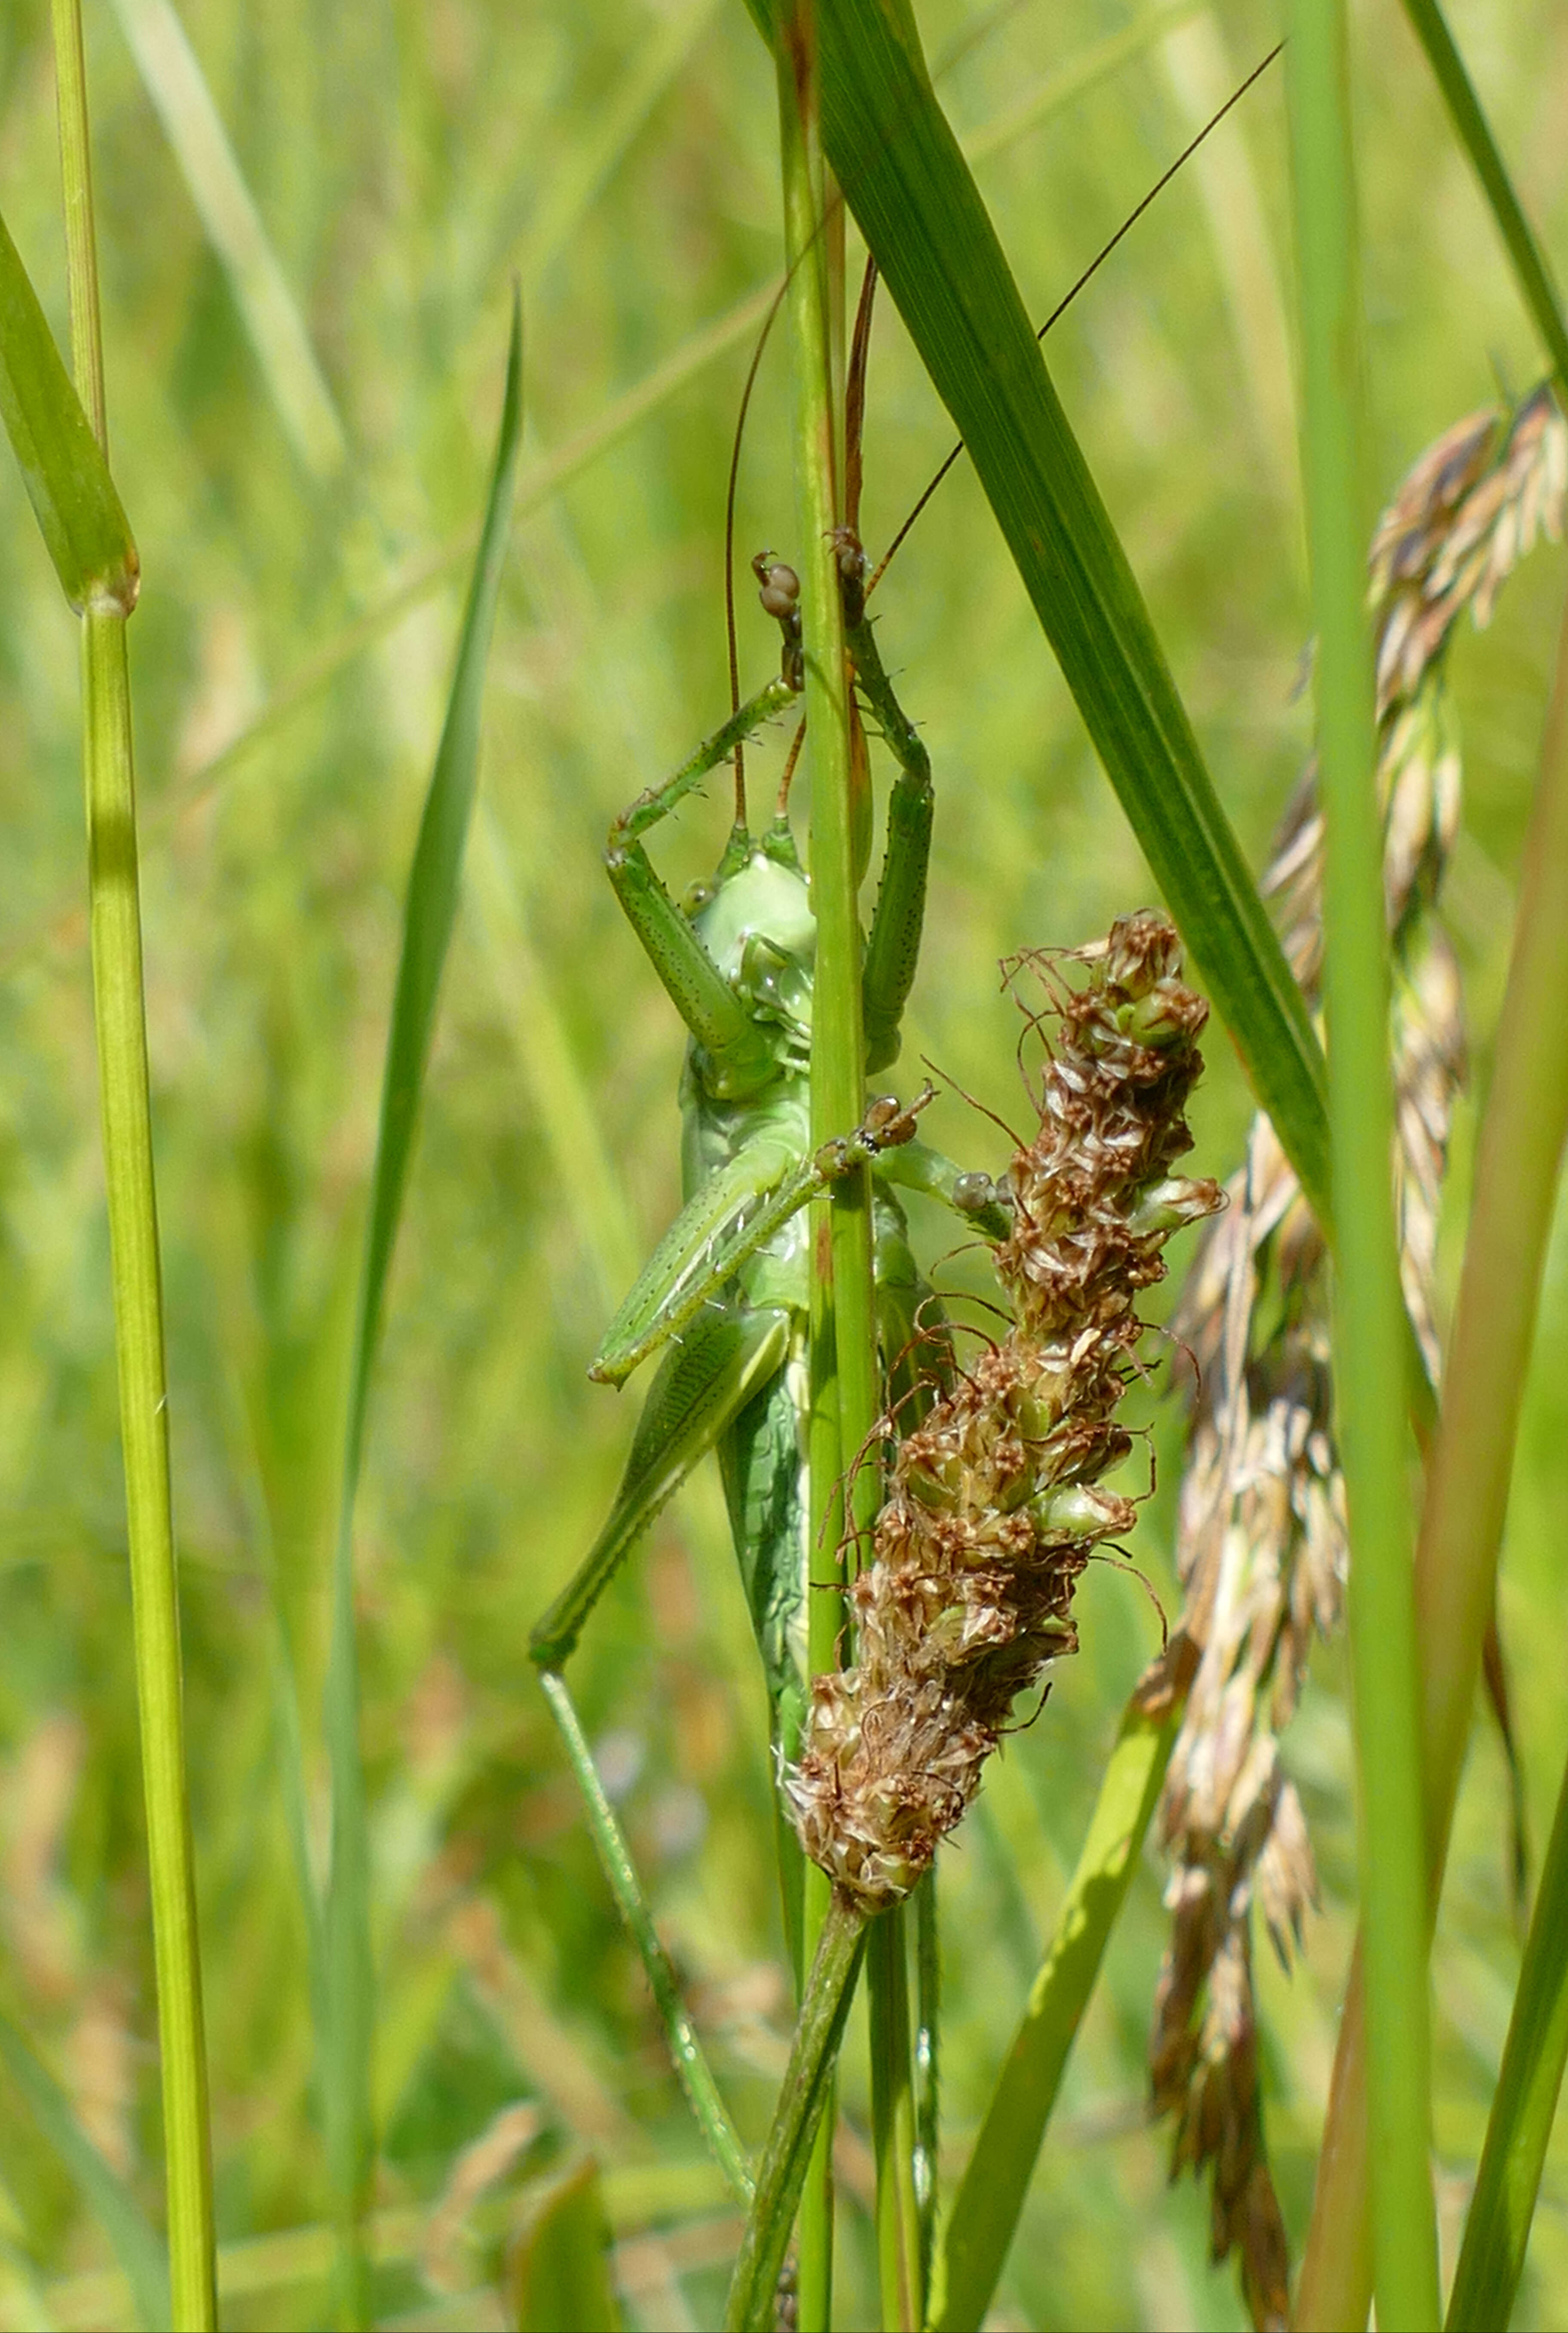 Image of katydid